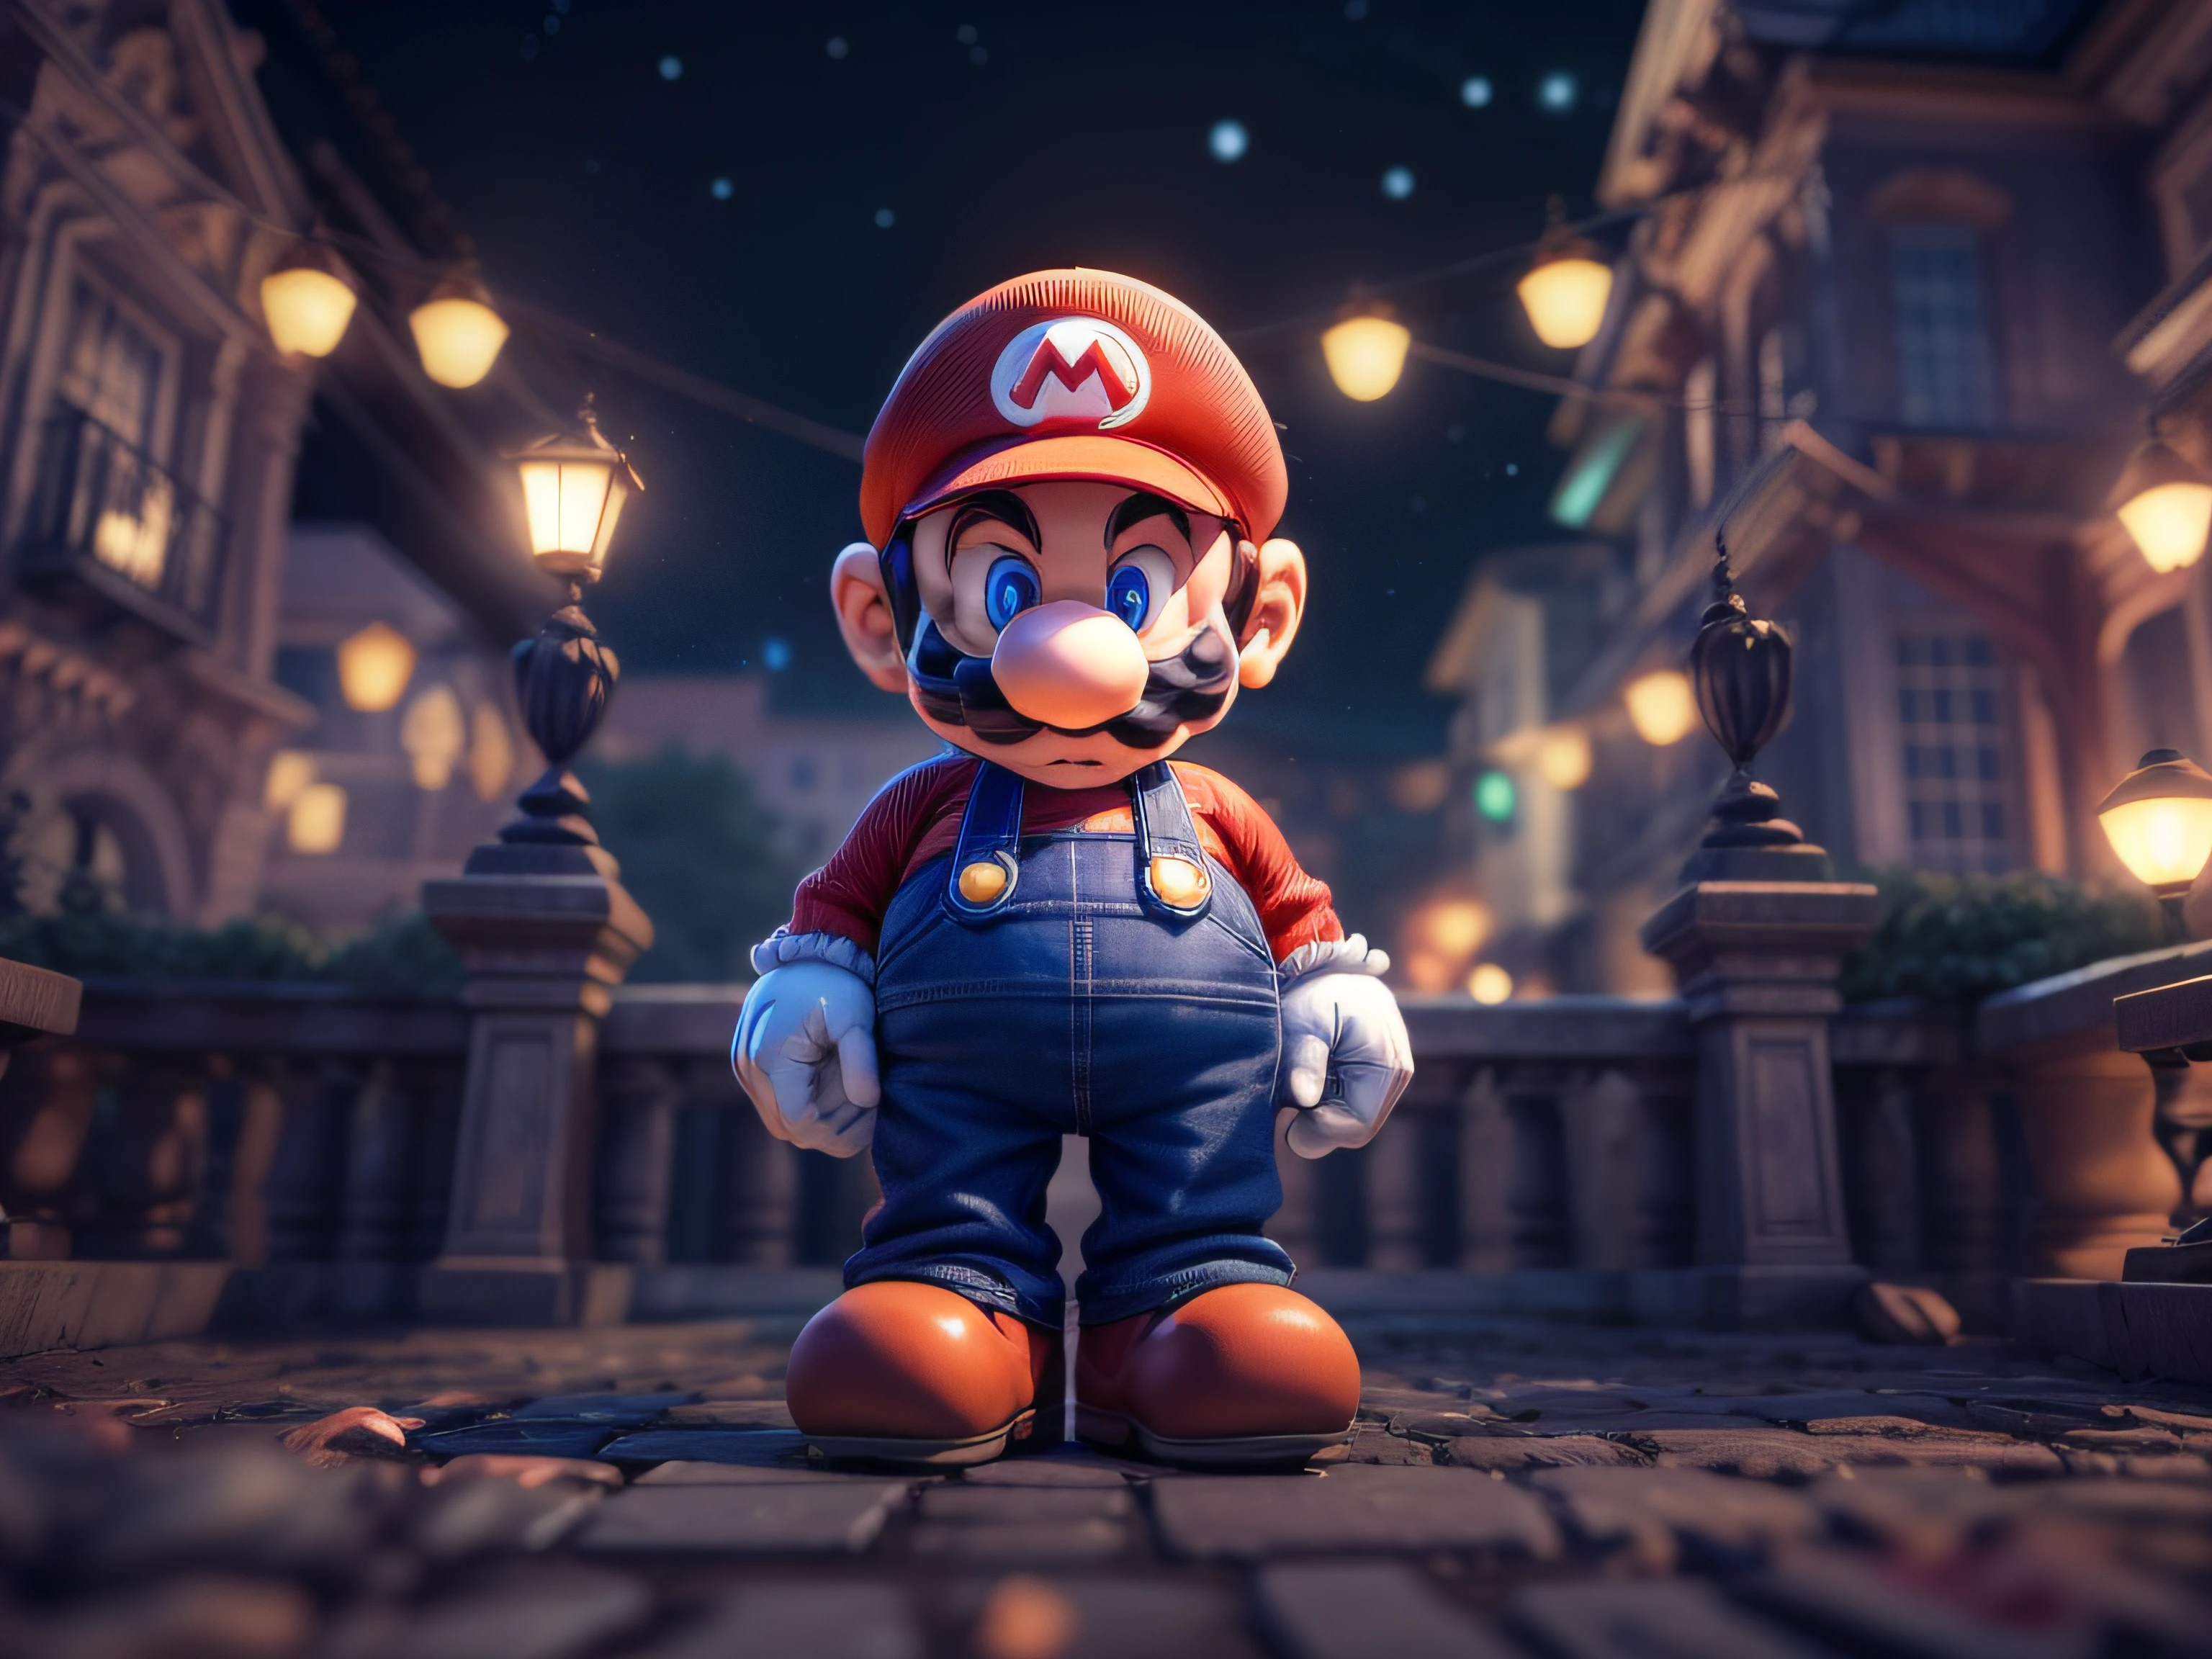 The imposing appearance of Super Mario Bros., menacing stare, ricamente detalhado, Hiper realista, 3D-rendering, obra-prima, NVIDIA, RTX, ray-traced, Bokeh, Night sky with a huge and beautiful full moon, estrelas brilhando,